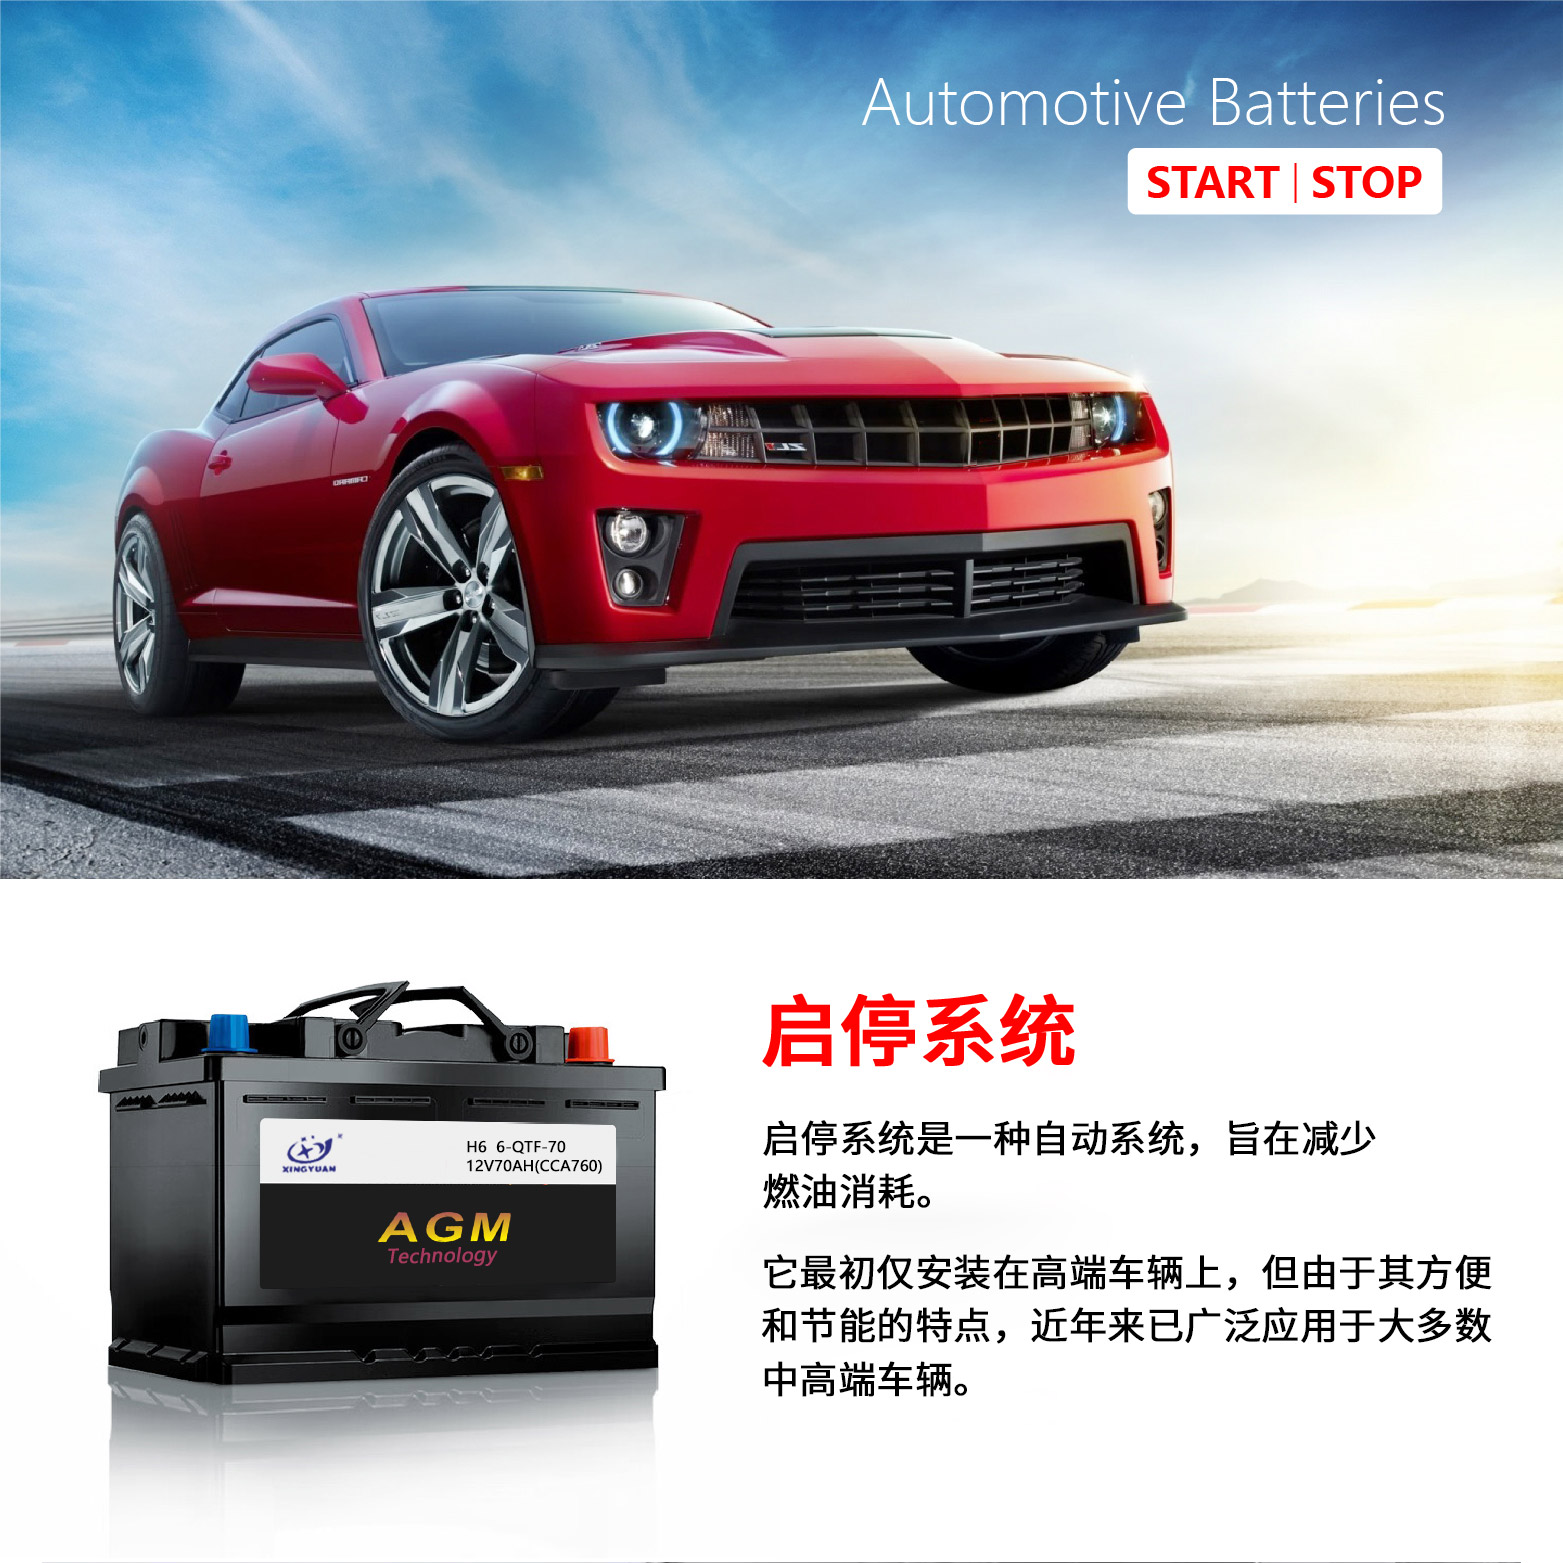 6-QTF-70 H6 Maintenance-free Battery 12V 70Ah agm Automotive Battery Automotive Start Stop Automotive Battery